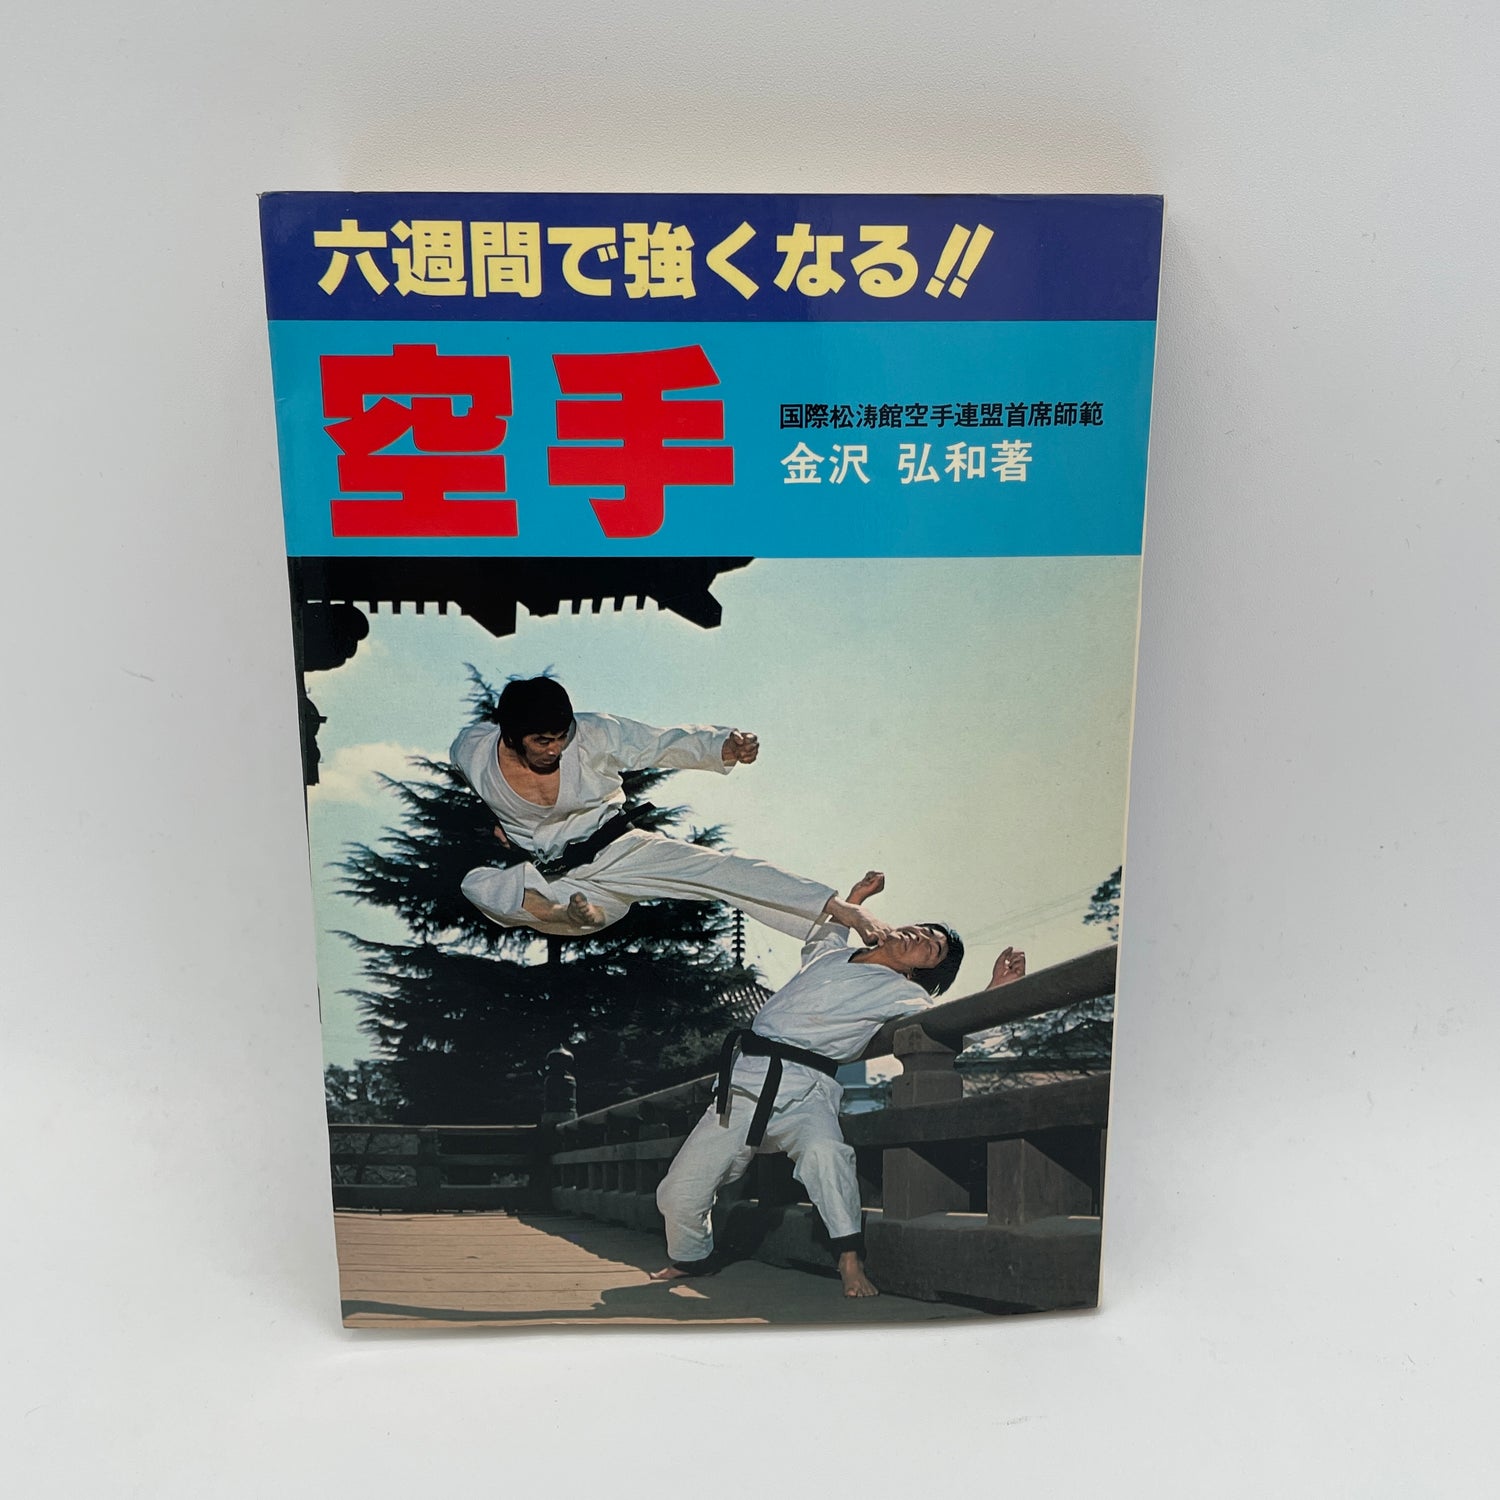 Become Stronger in Karate in 6 Weeks! Book by Hirokazu Kanazawa (Preowned)